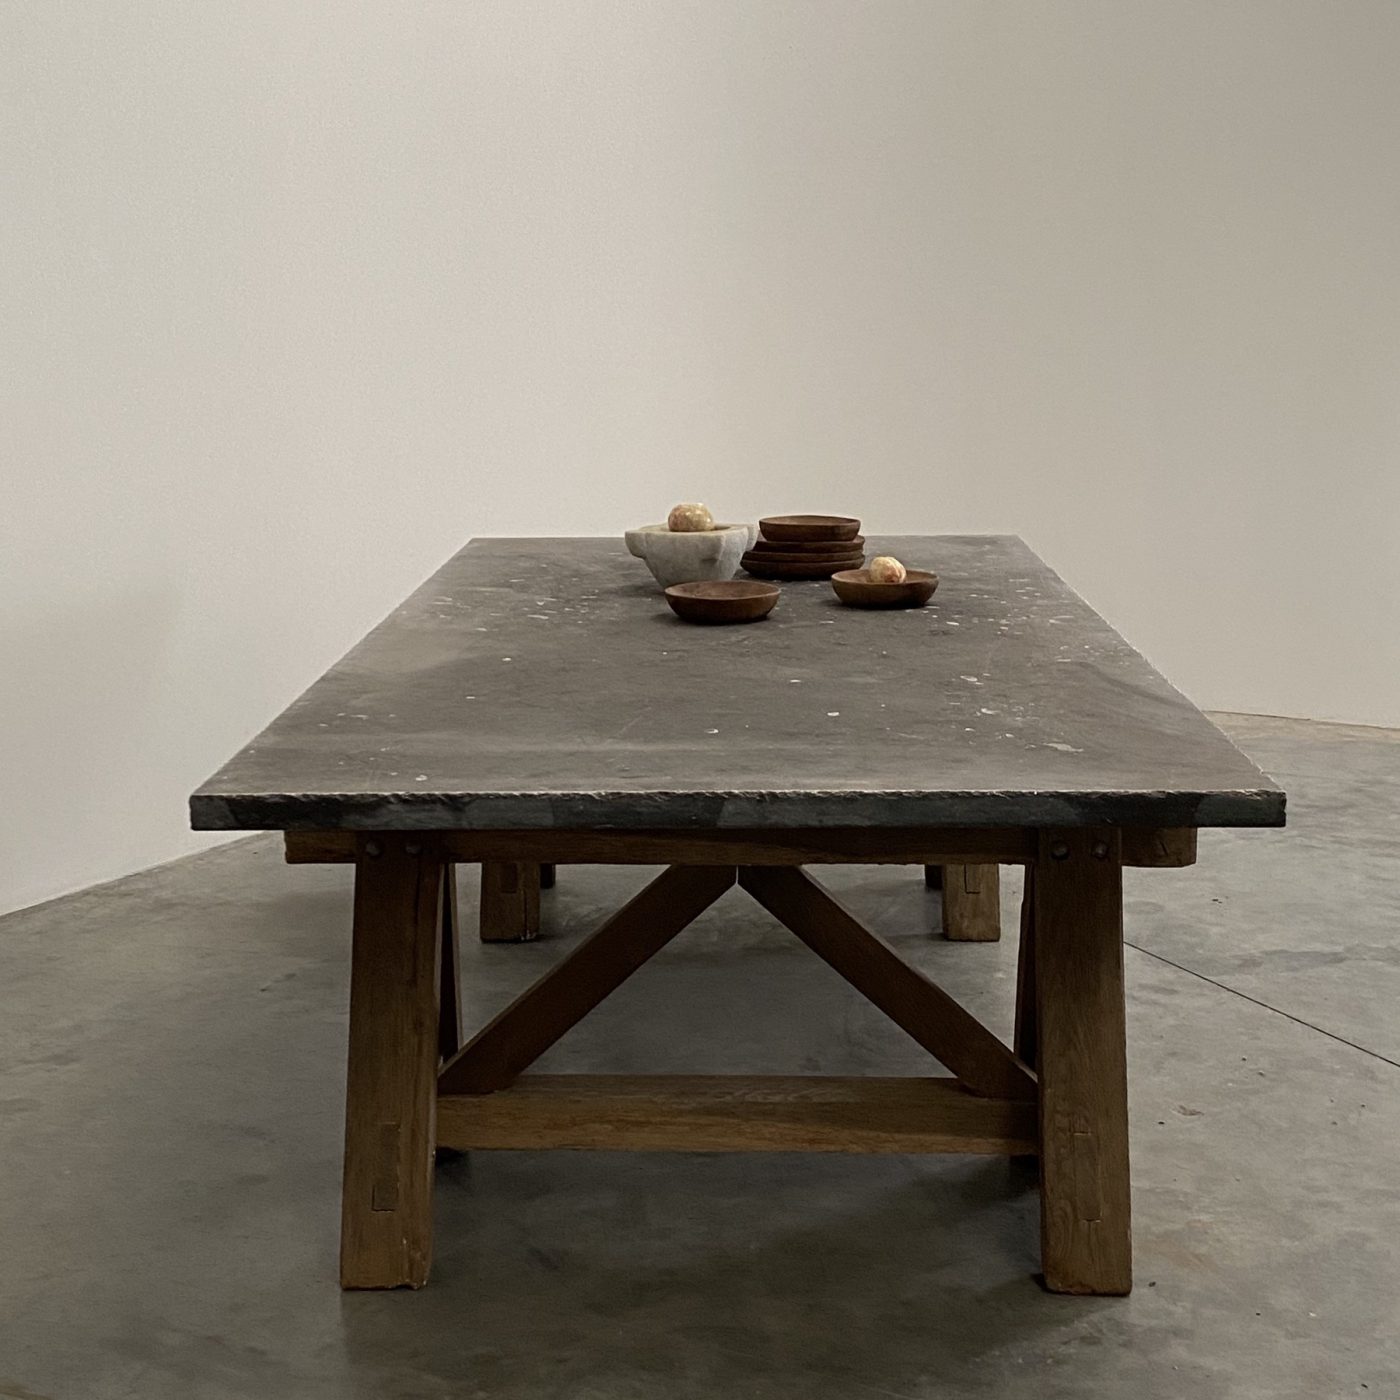 objet-vagabond-stone-table0009